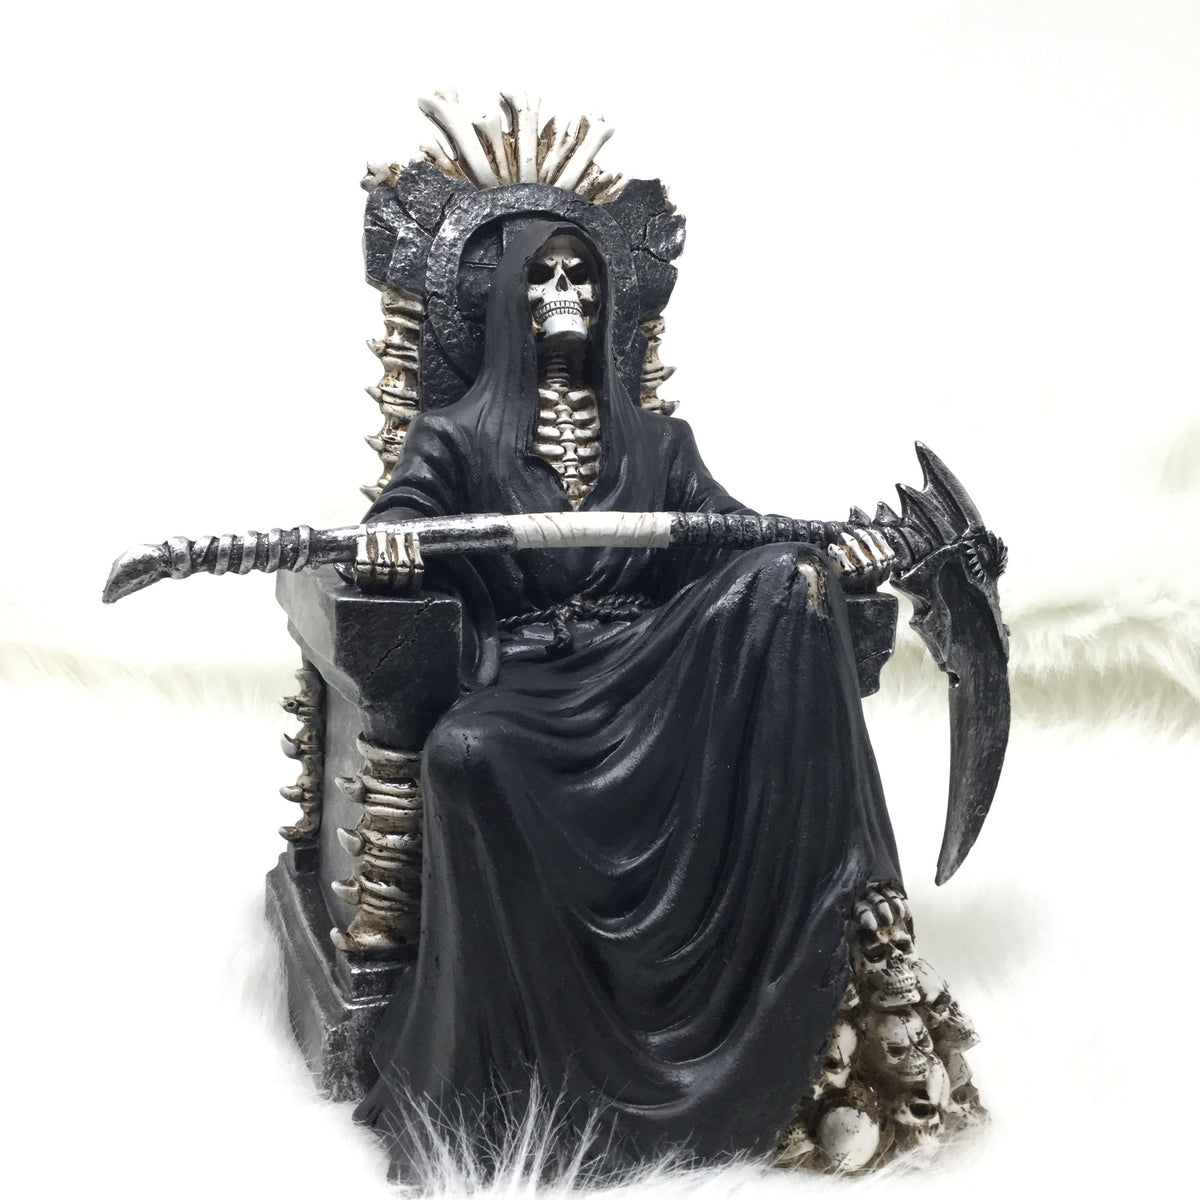 The Bone Throne